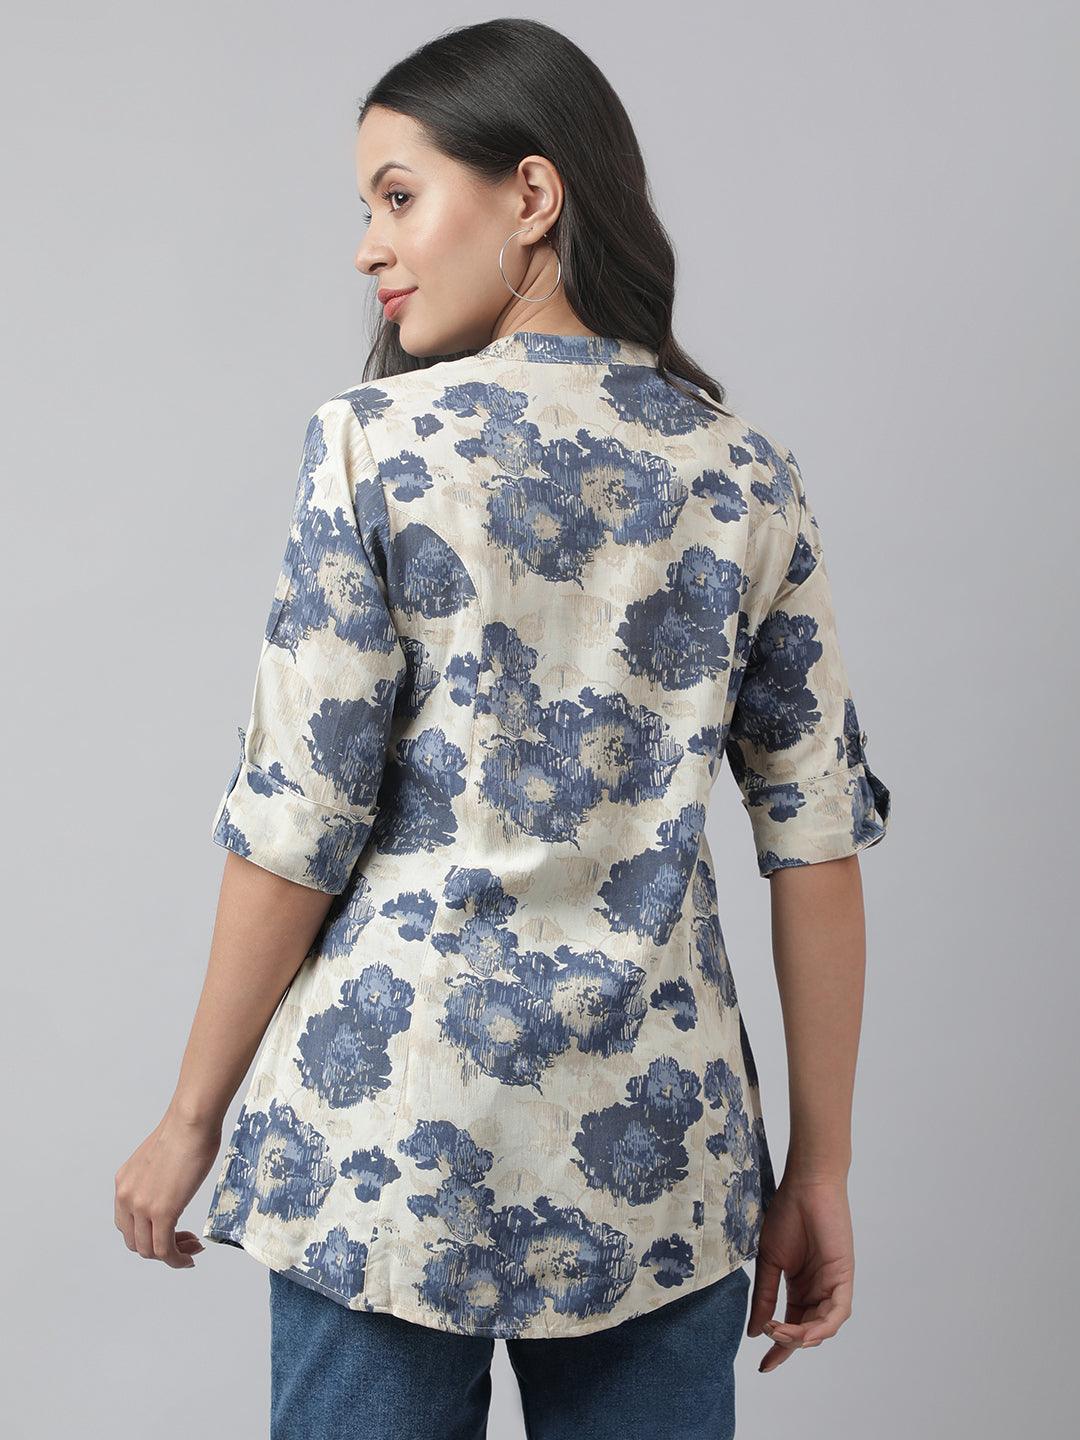 Divena Cream Floral Printed Rayon A-line Shirt Style Top - divena world